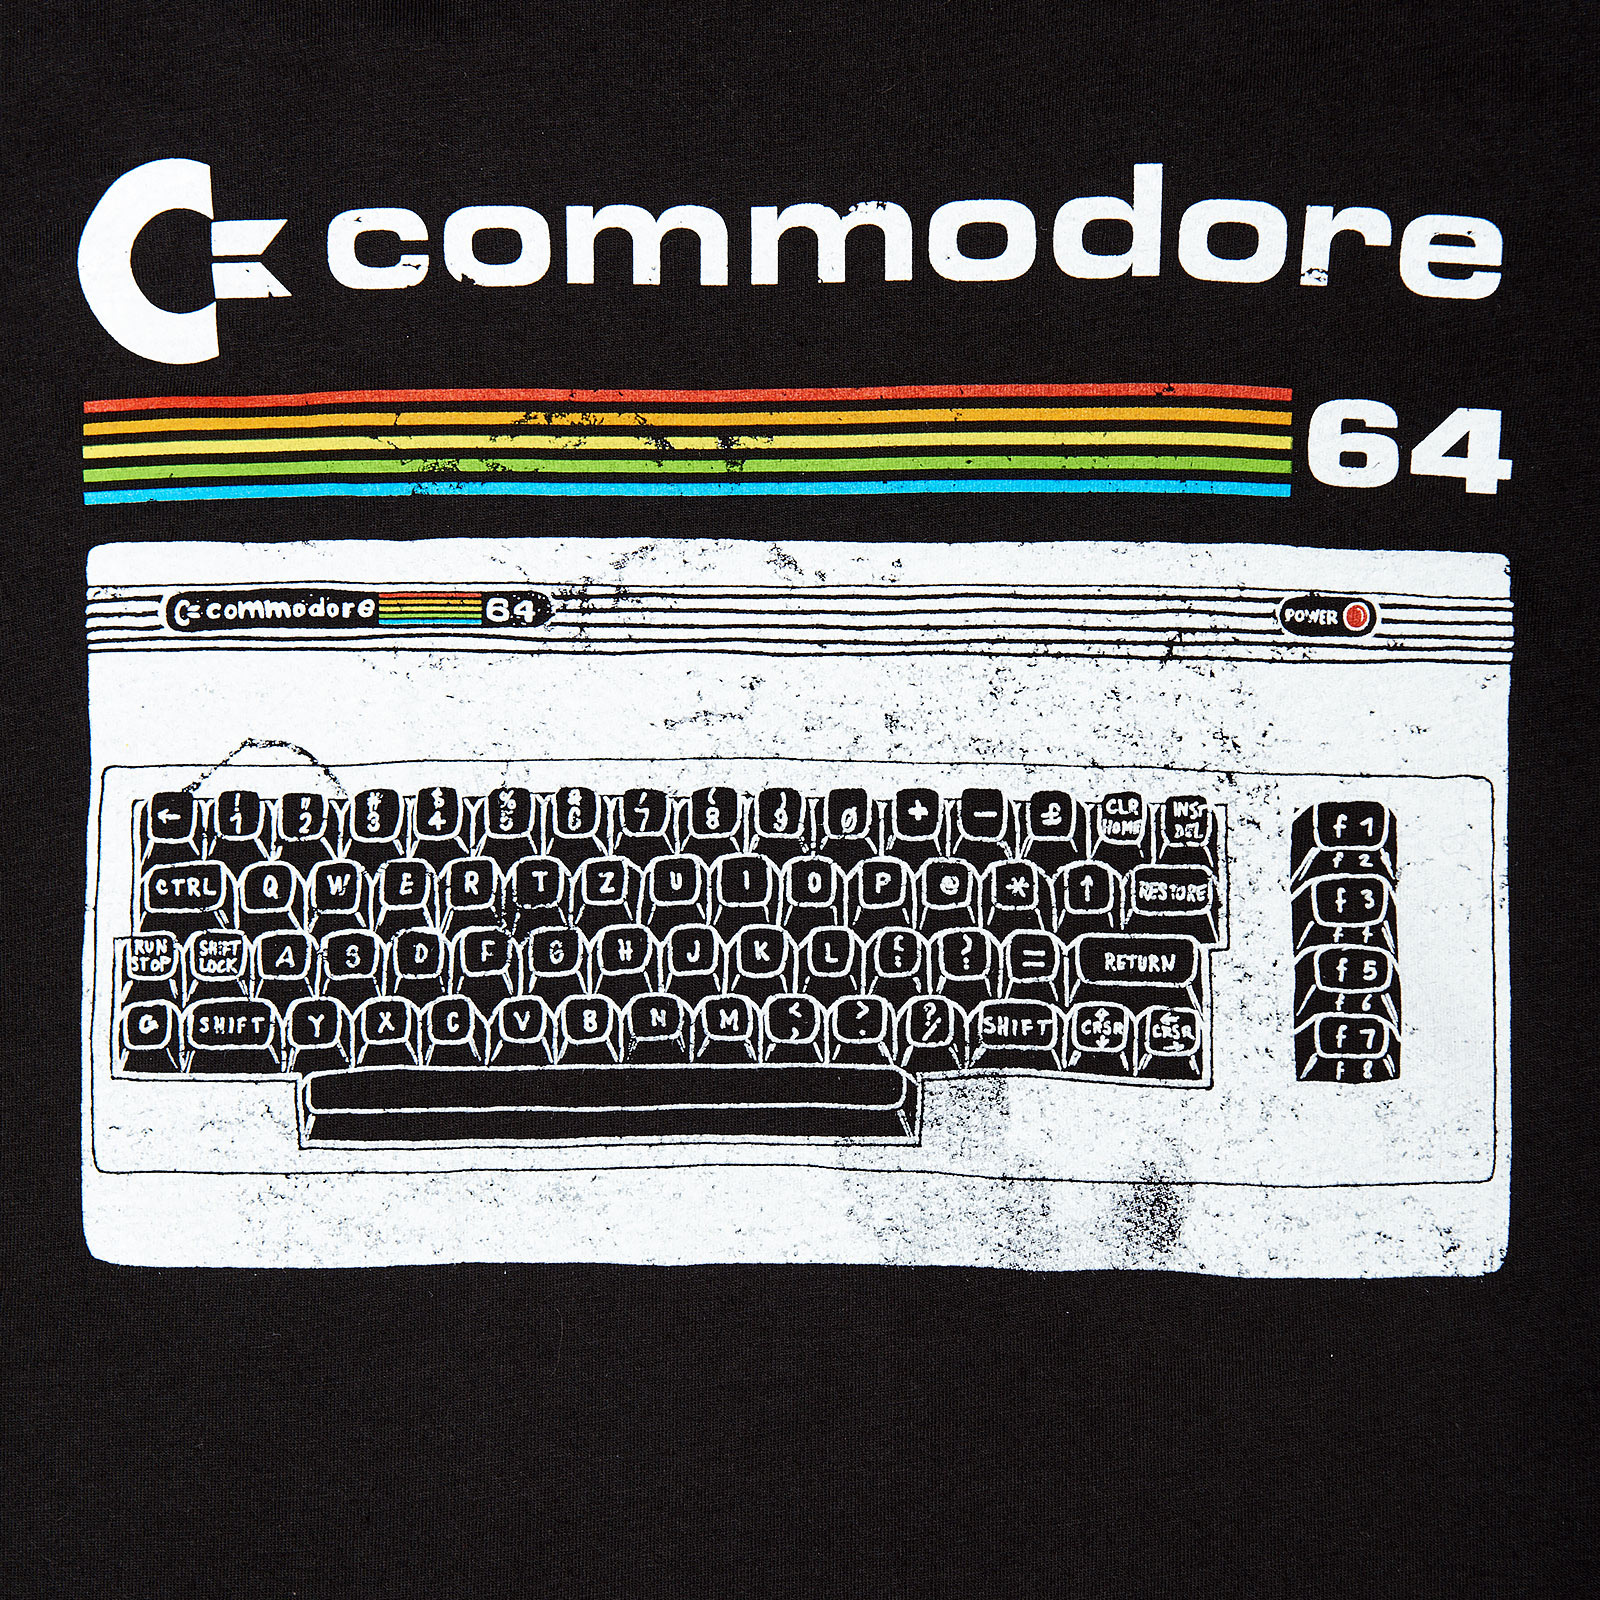 Commodore 64 - Classic Keyboard T-Shirt Black